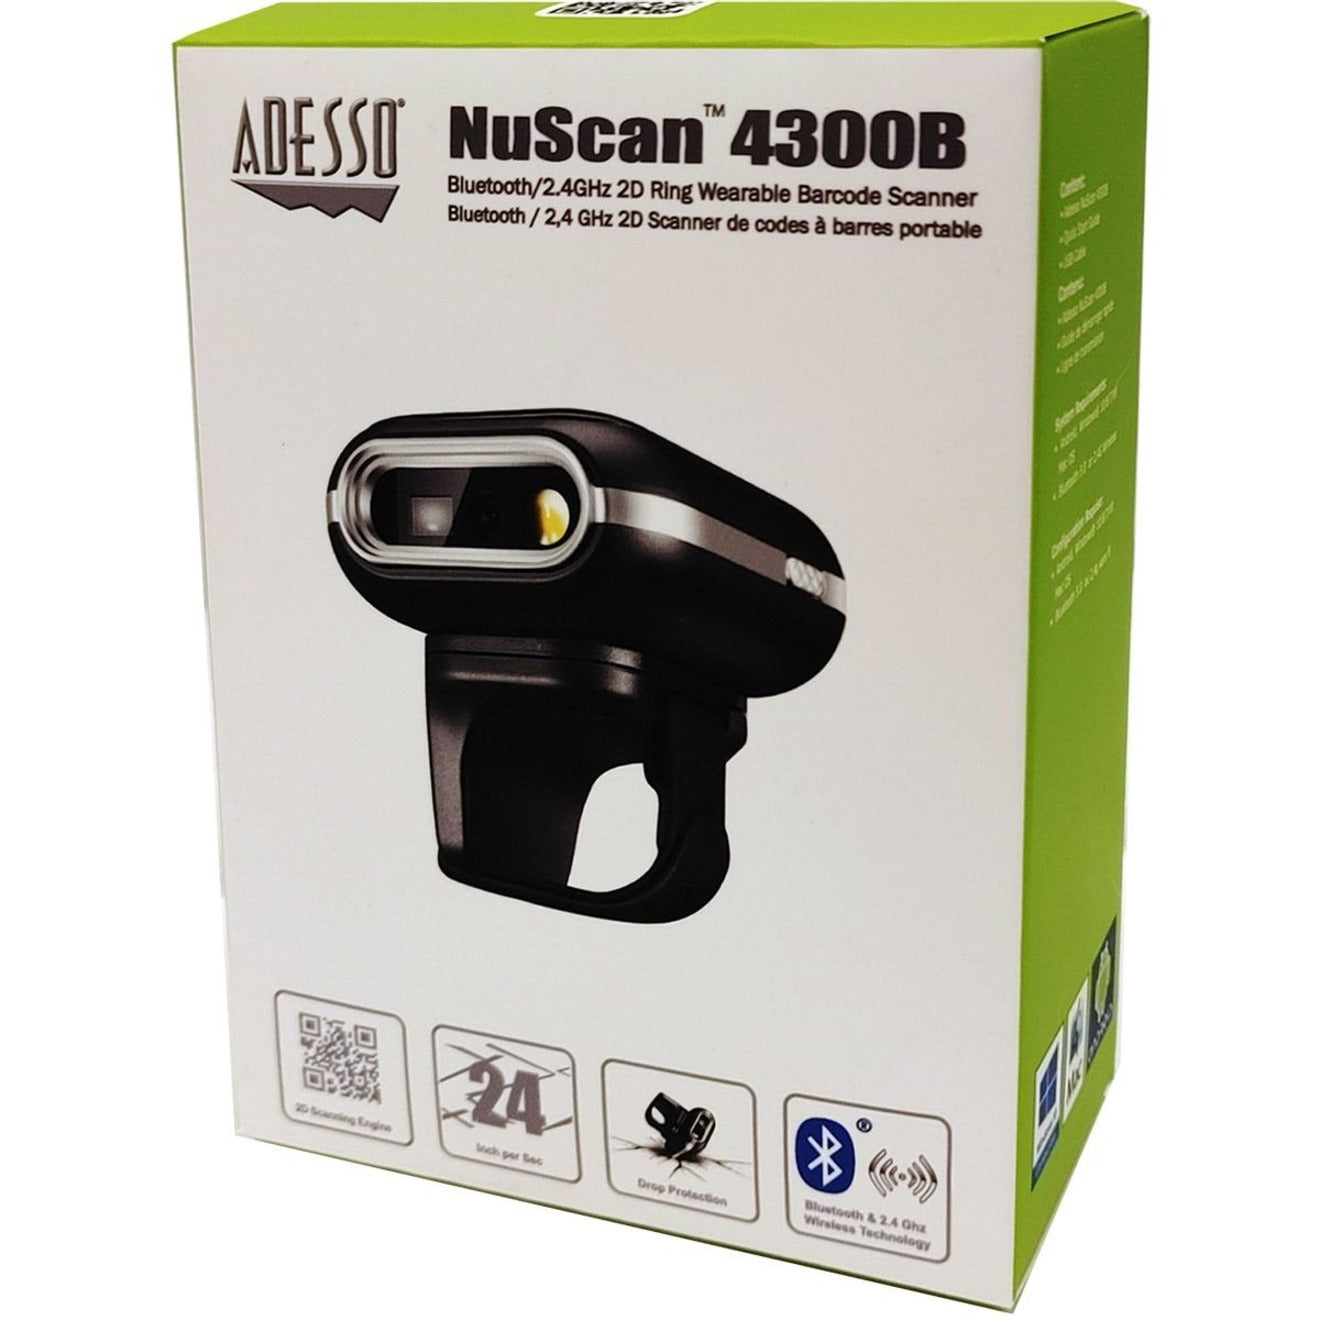 Adesso NUSCAN4300B NuScan 4300B Bluetooth 2D Ring Wearable Barcode Scanner, Long Range, Wireless